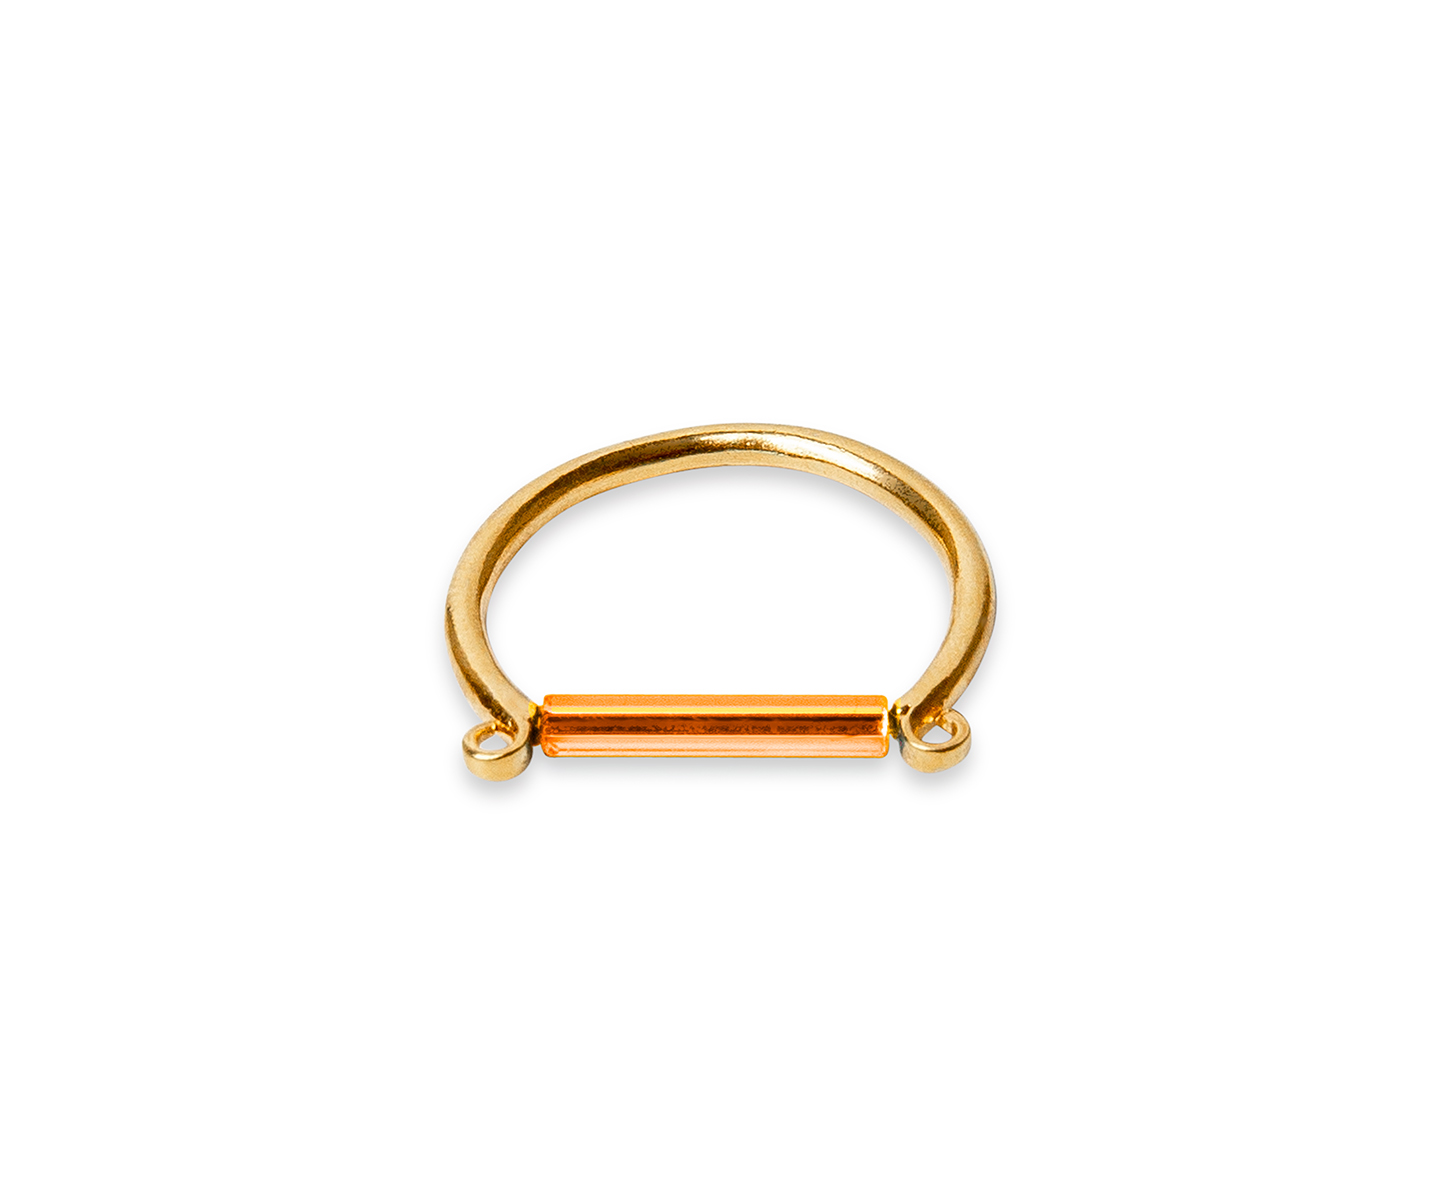 Gold ring with minimalist neon orange bar